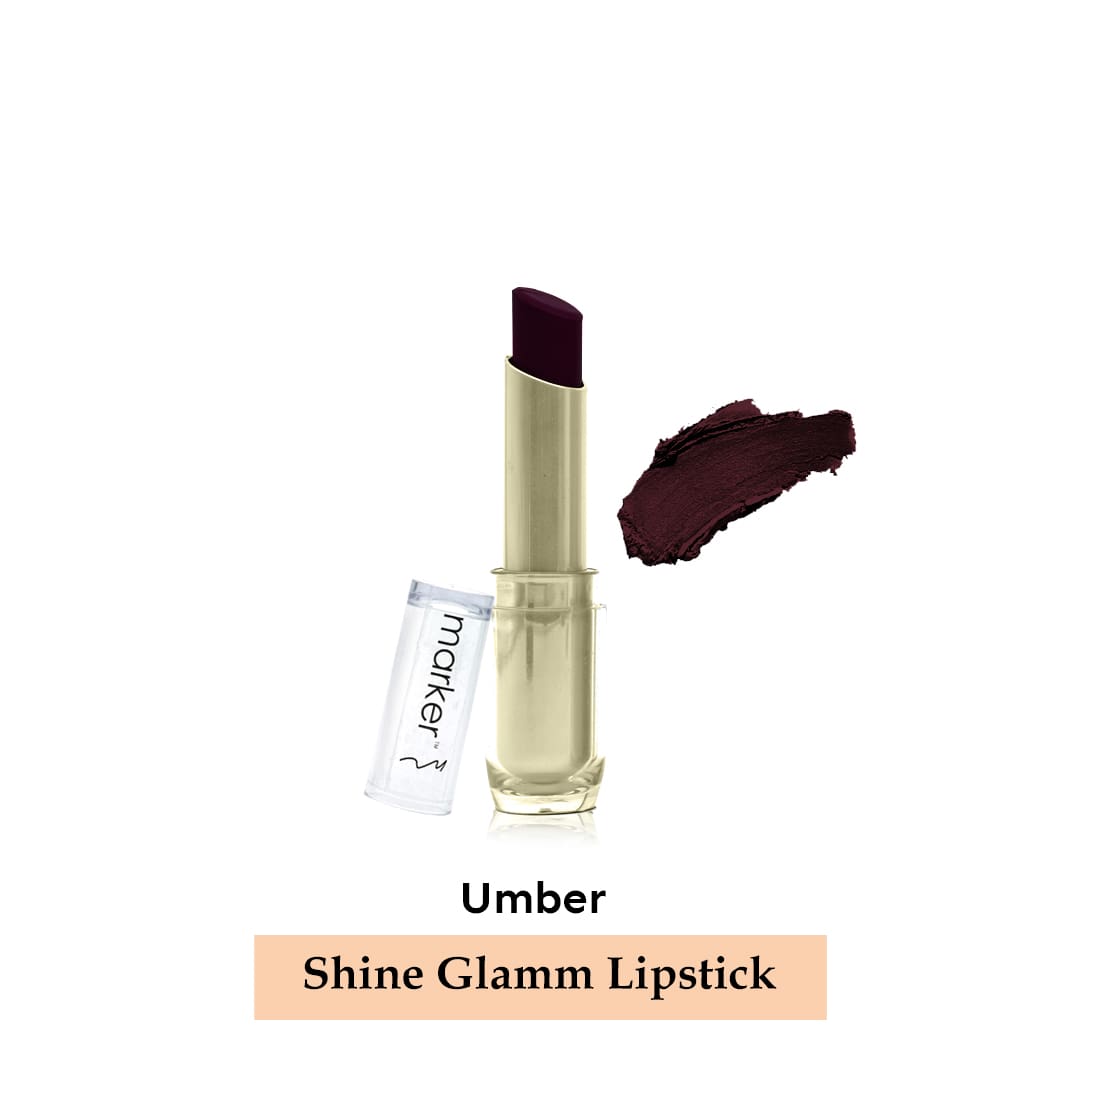 Shine Glamm Lipstick